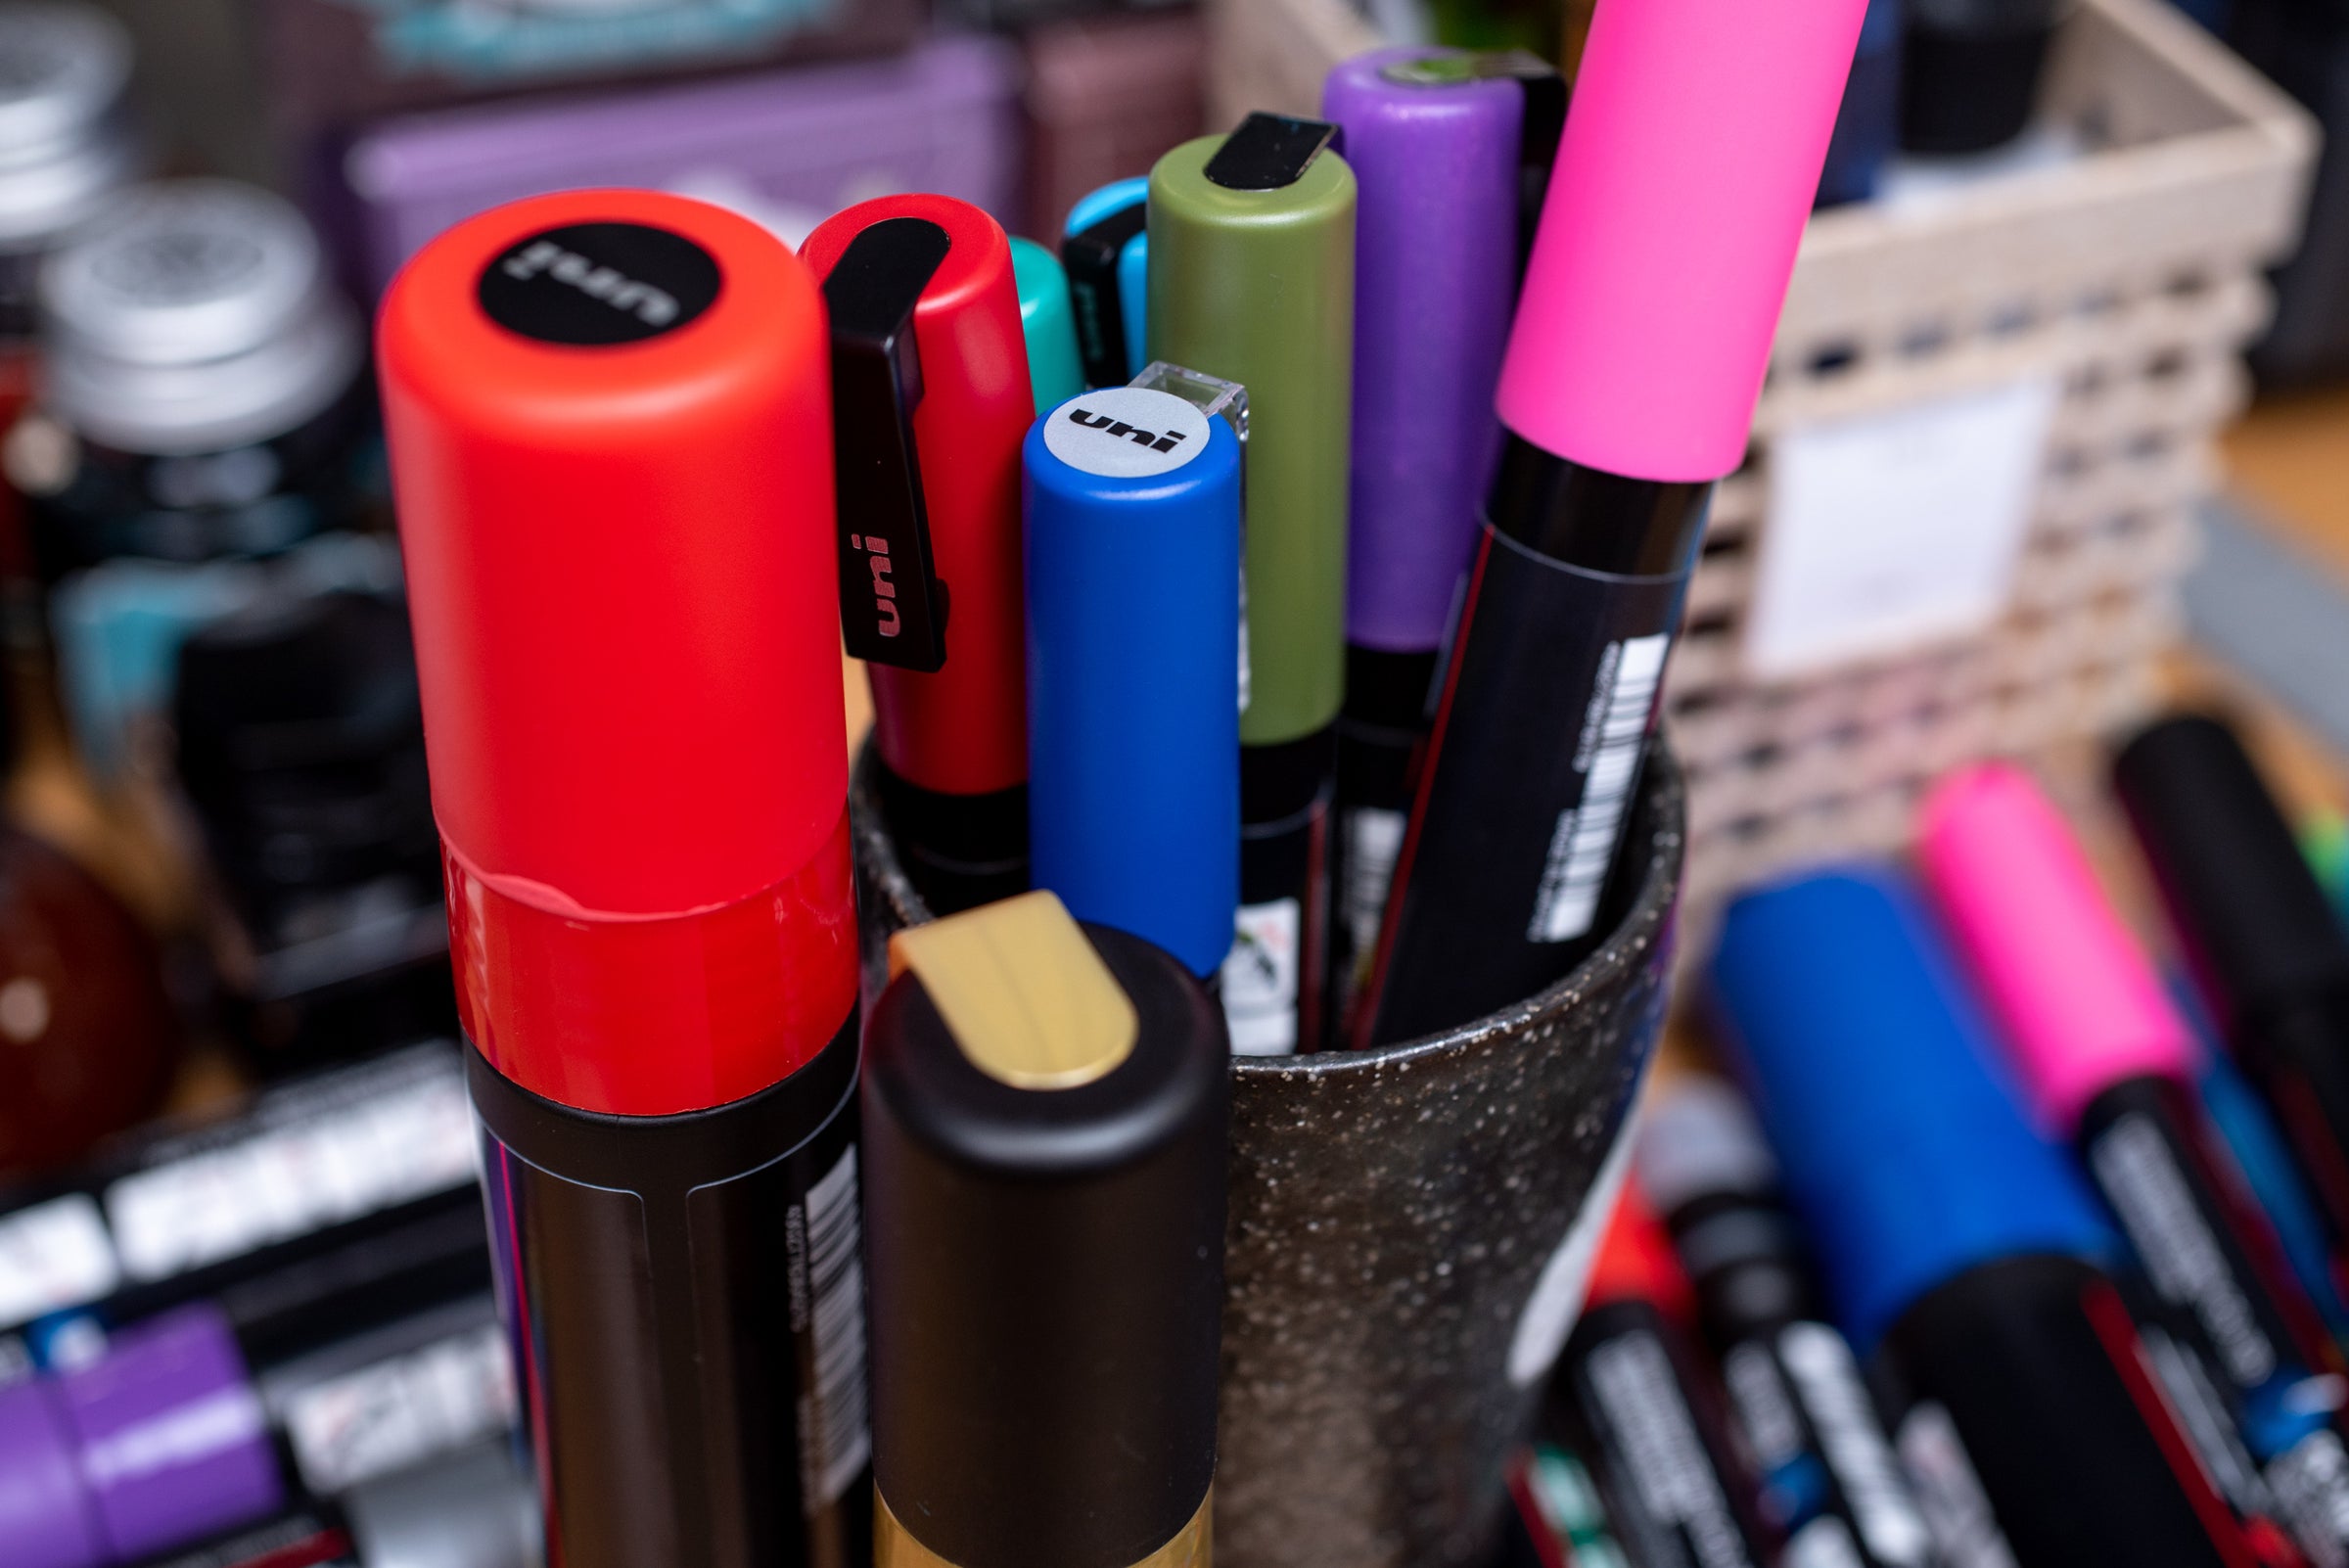 Uni Posca Paint Markers Set of 8 Colors - InfamyArt